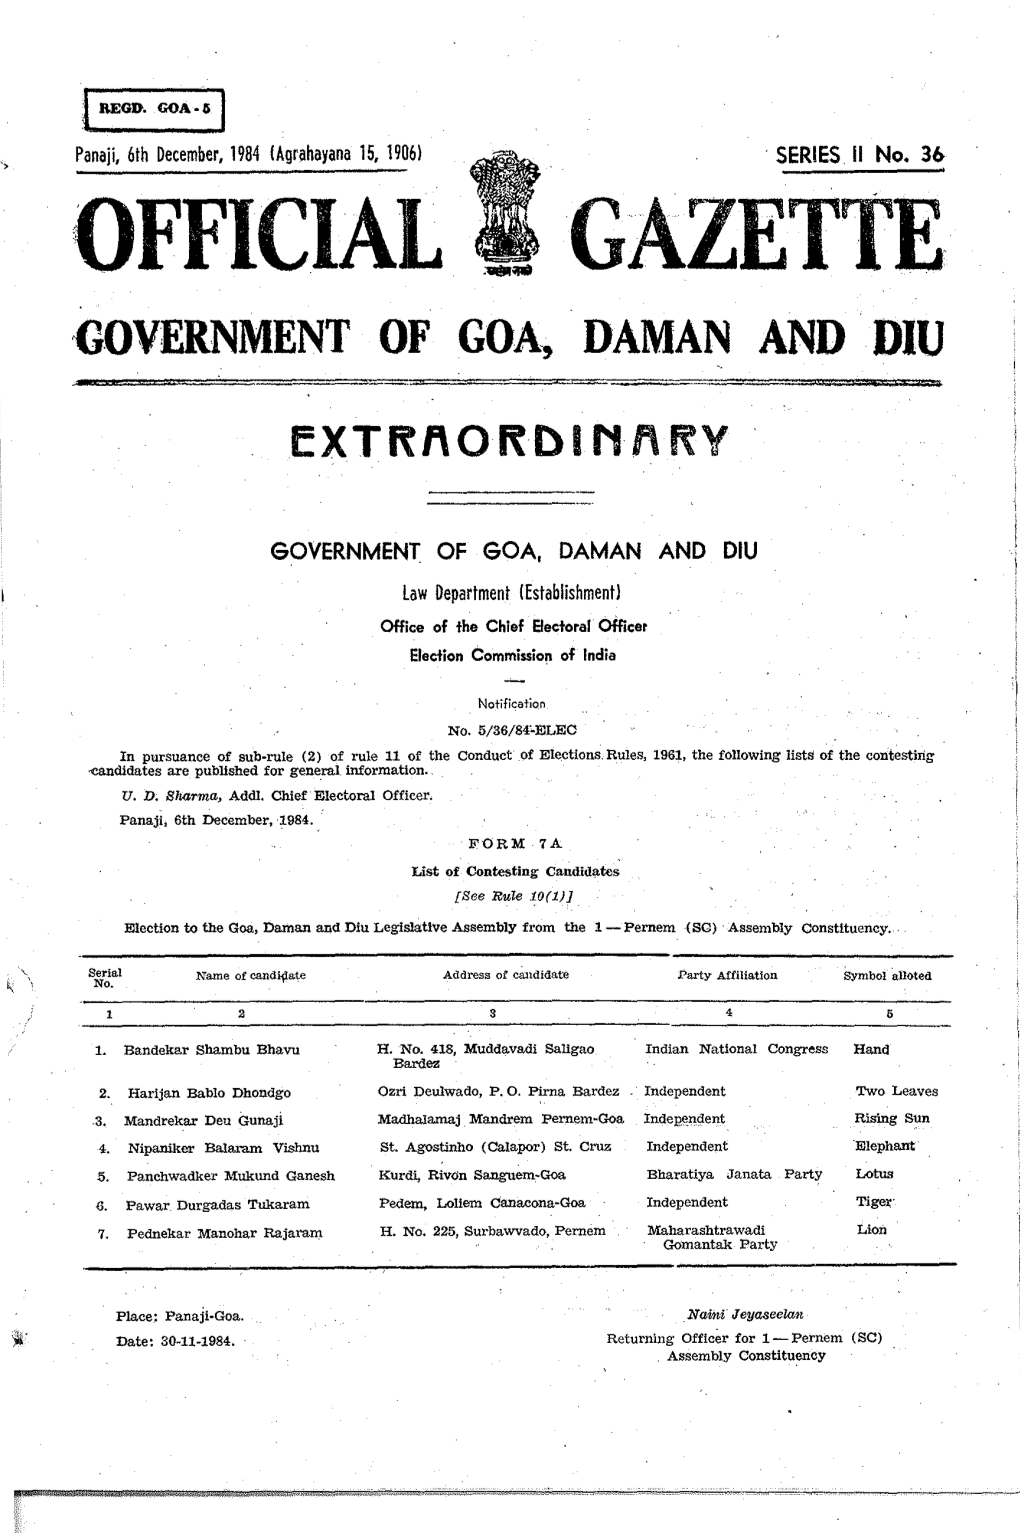 Official Gazette G.Overnment of Goa., Daman and Diu